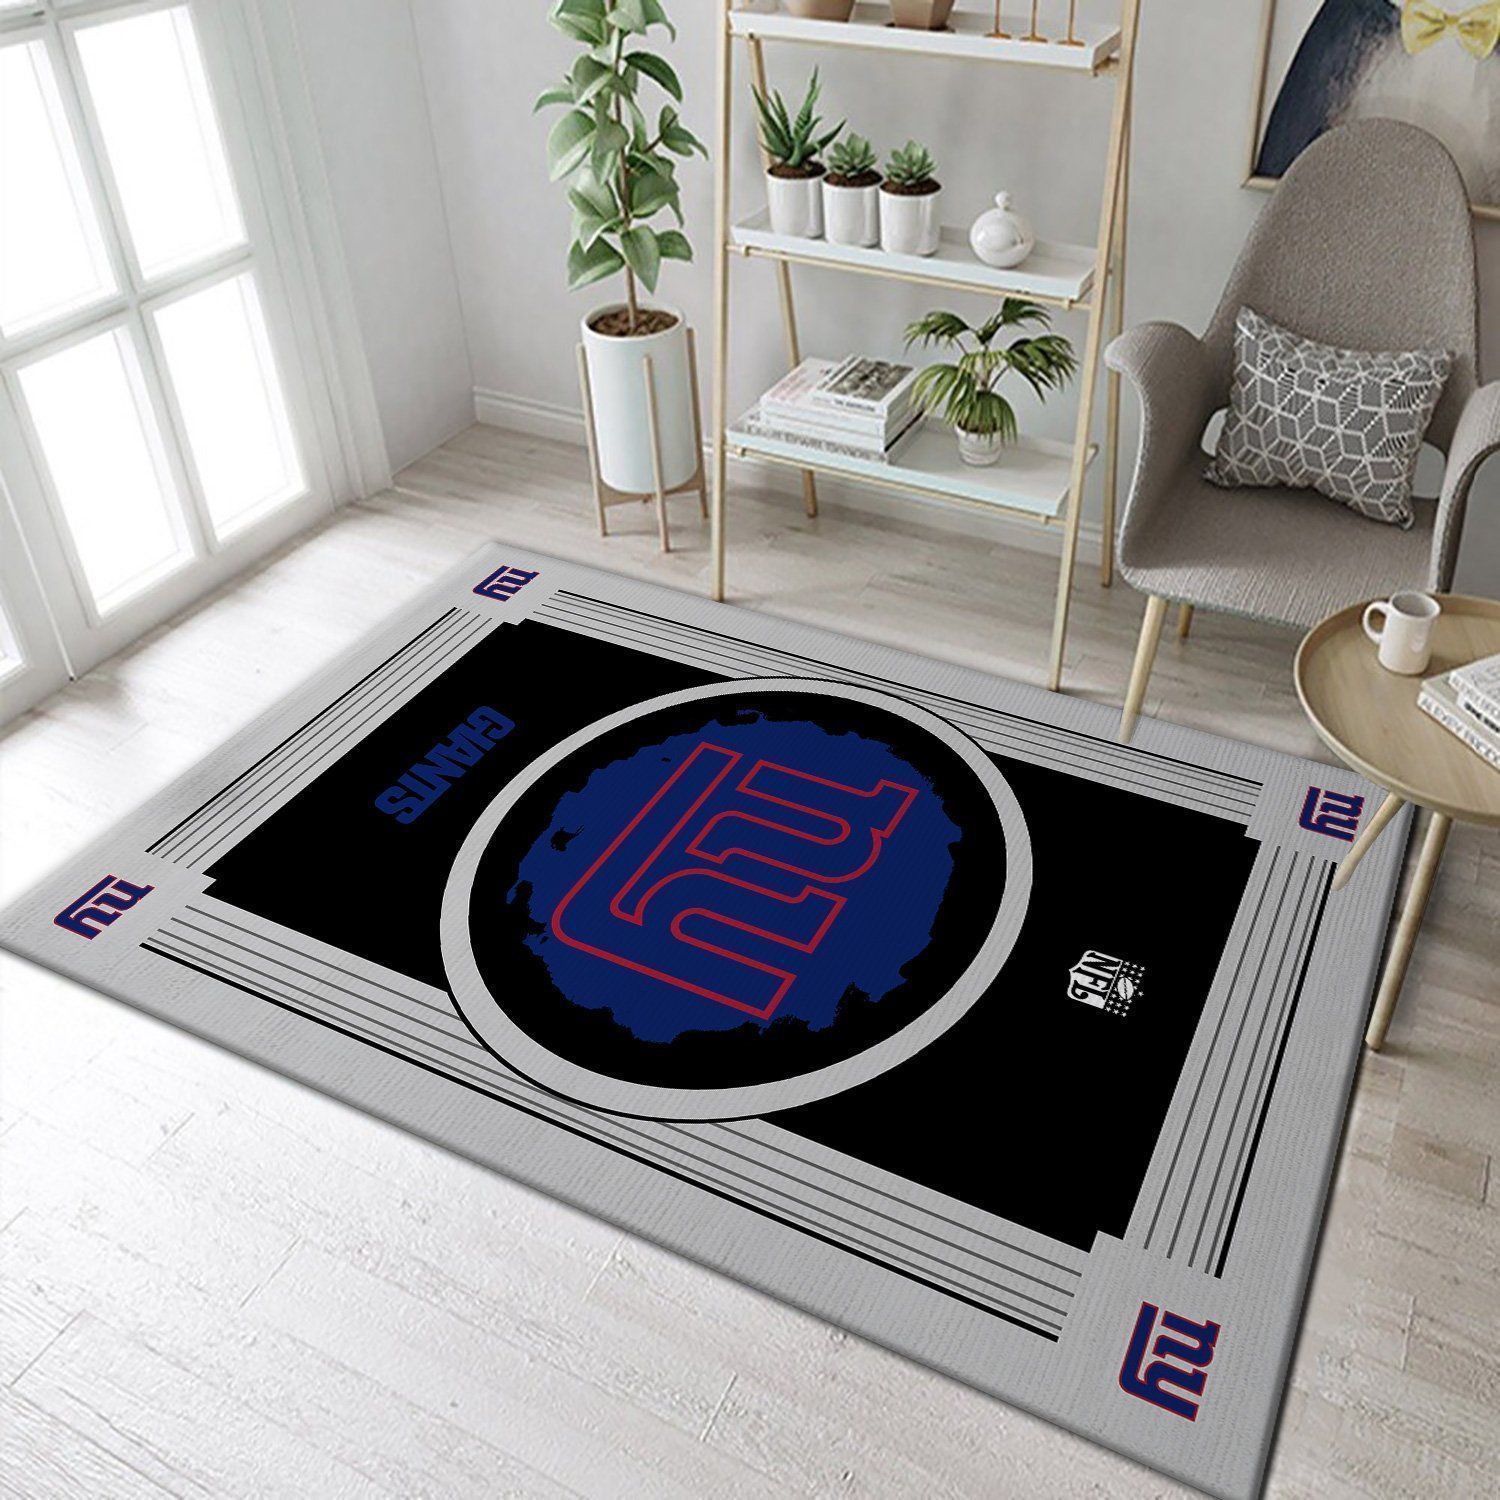 New York Giants NFL Team Logo Area Rugs Living Room Carpet Floor Decor The US Decor - Indoor Outdoor Rugs